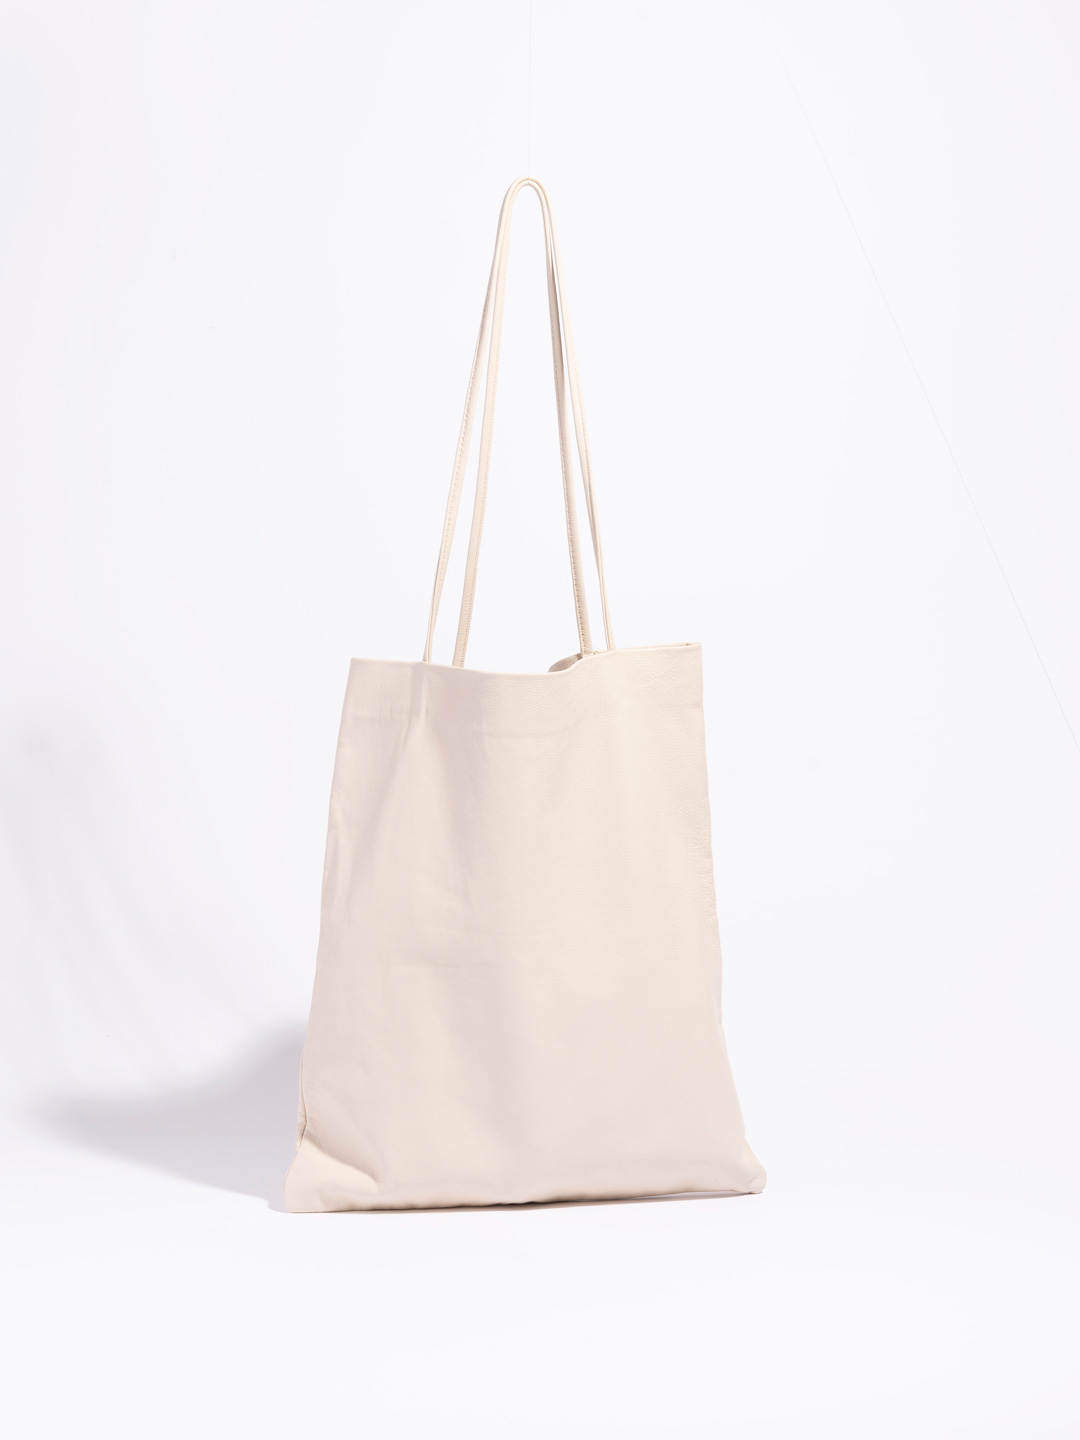 MODERN WEAVING Bag(モダン ウィーヴィング バッグ ) | Bag | ESCAPERS